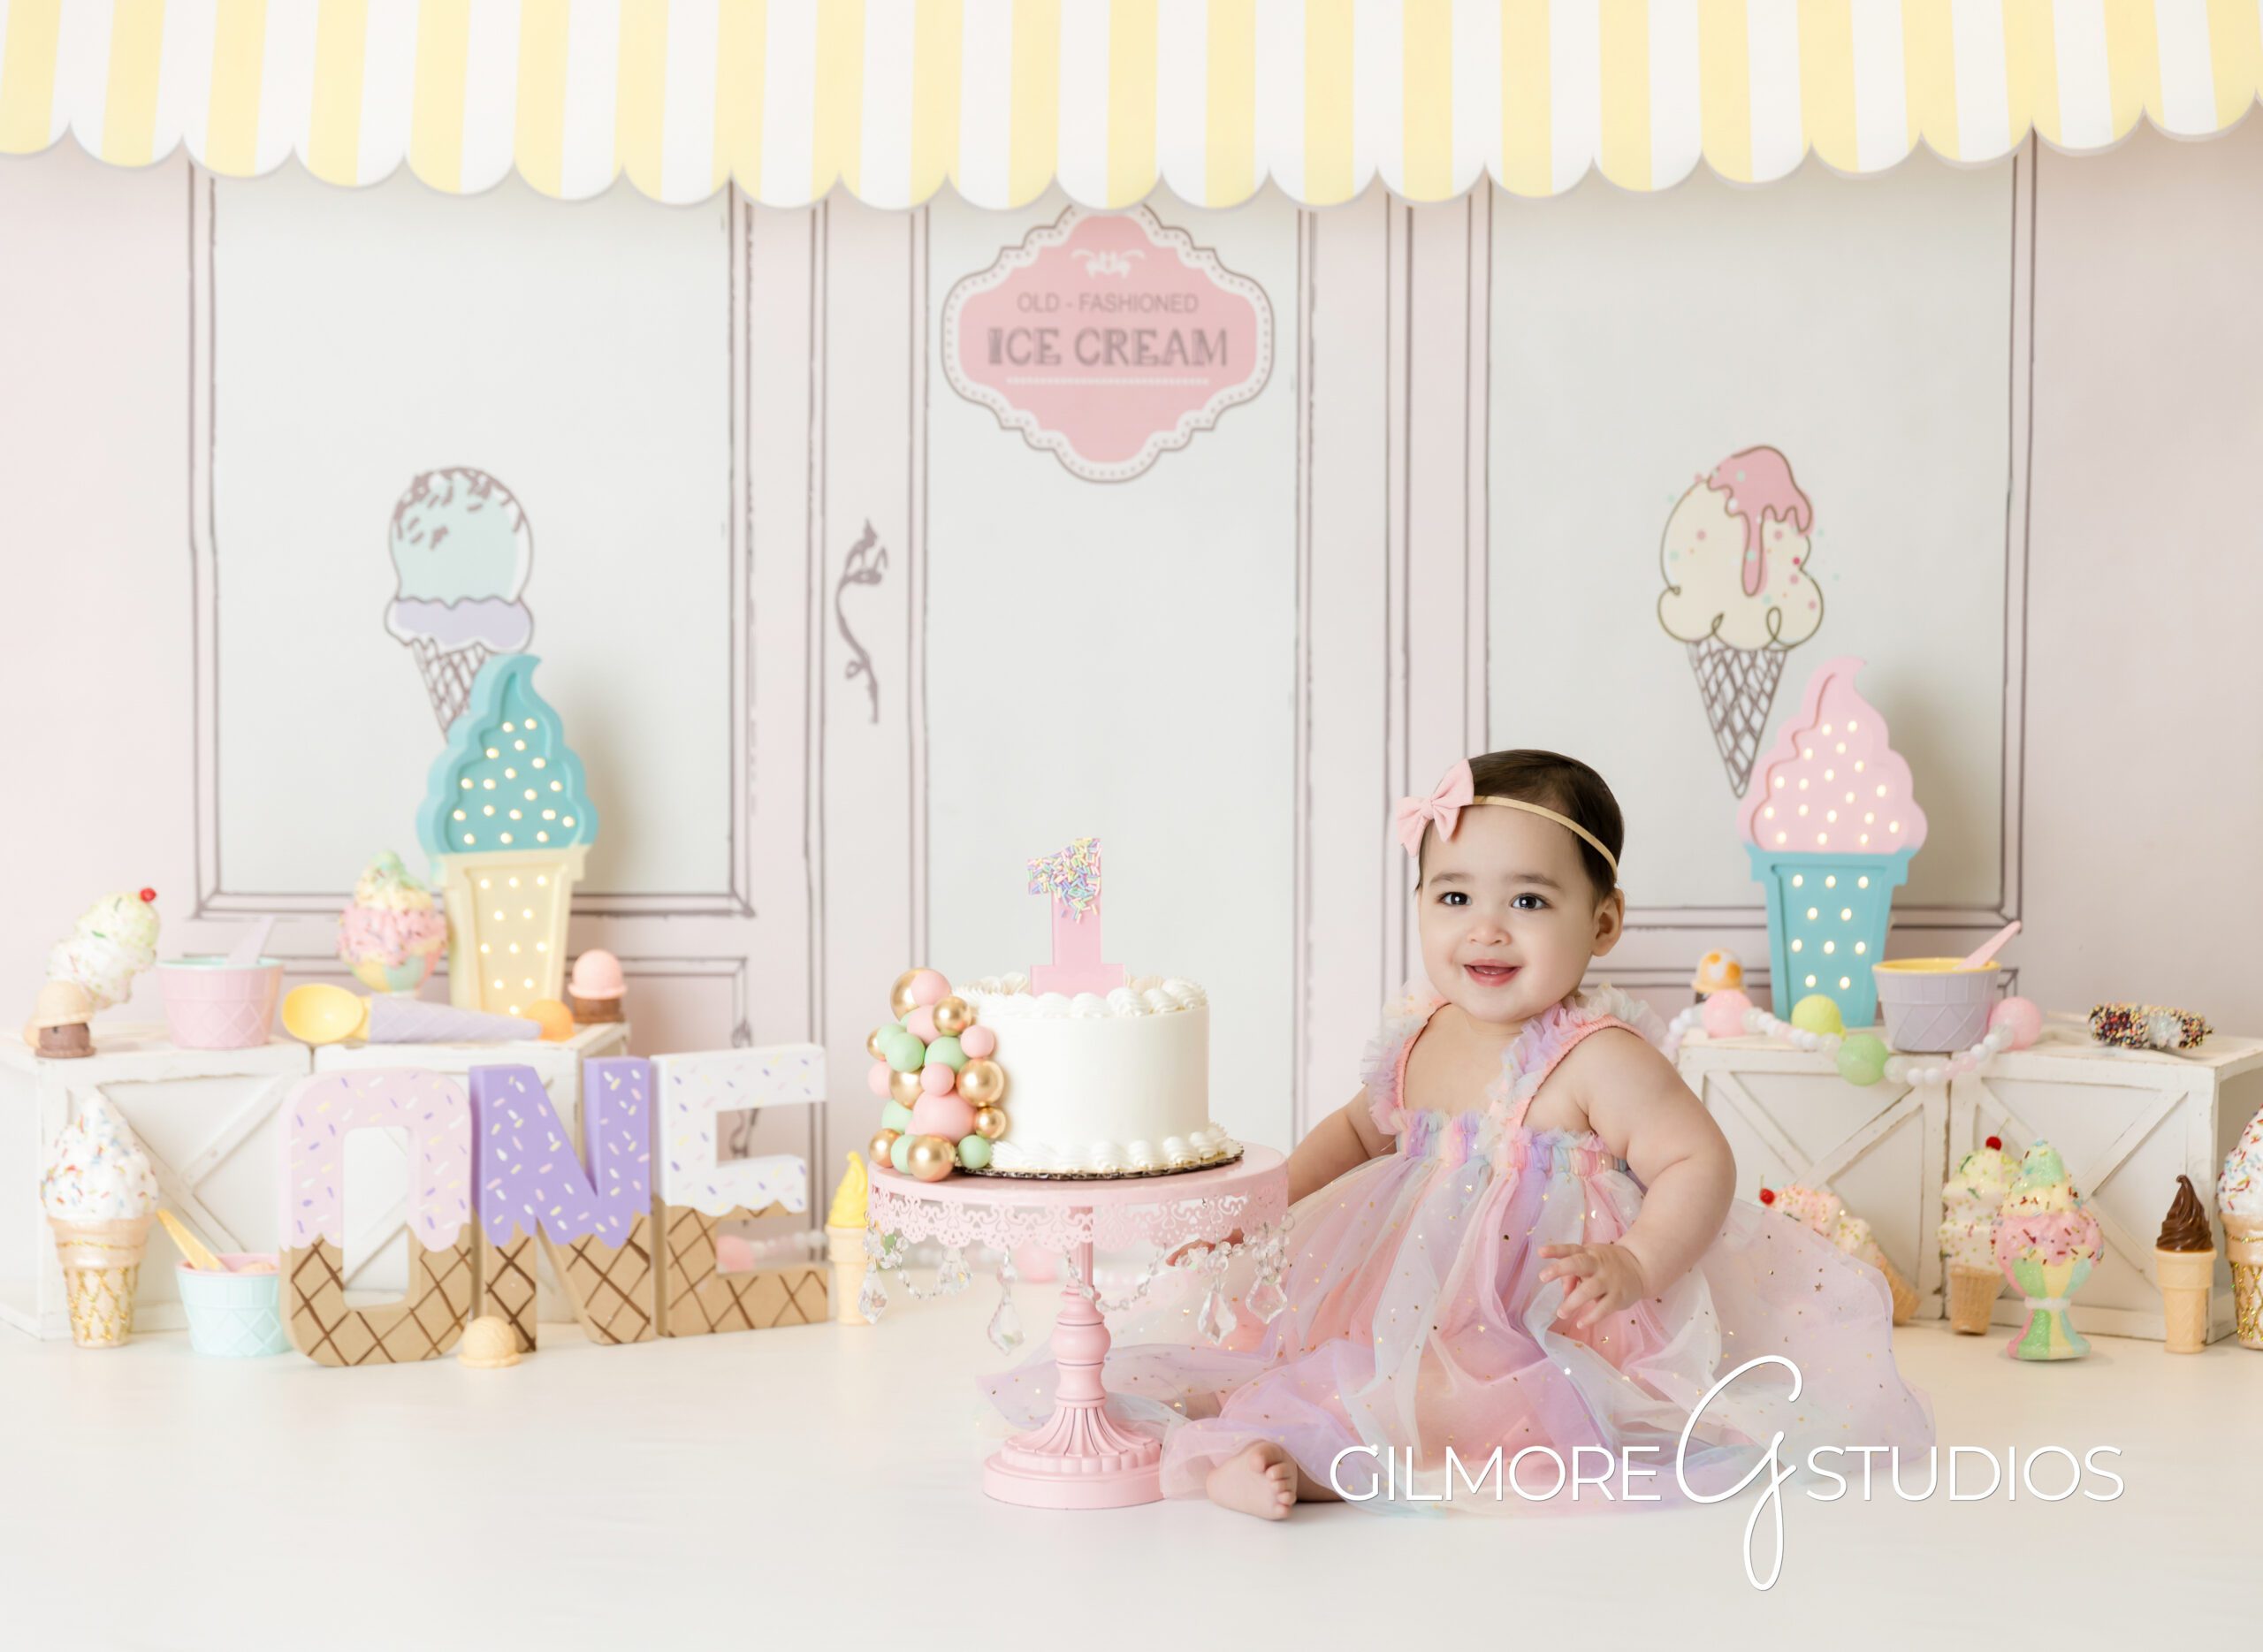 ice cream theme cake Smash, little girl, white cake, pink dress, pink bow, ice cream, ice cream parlor, photography, cake Smash, Gilmore Studios